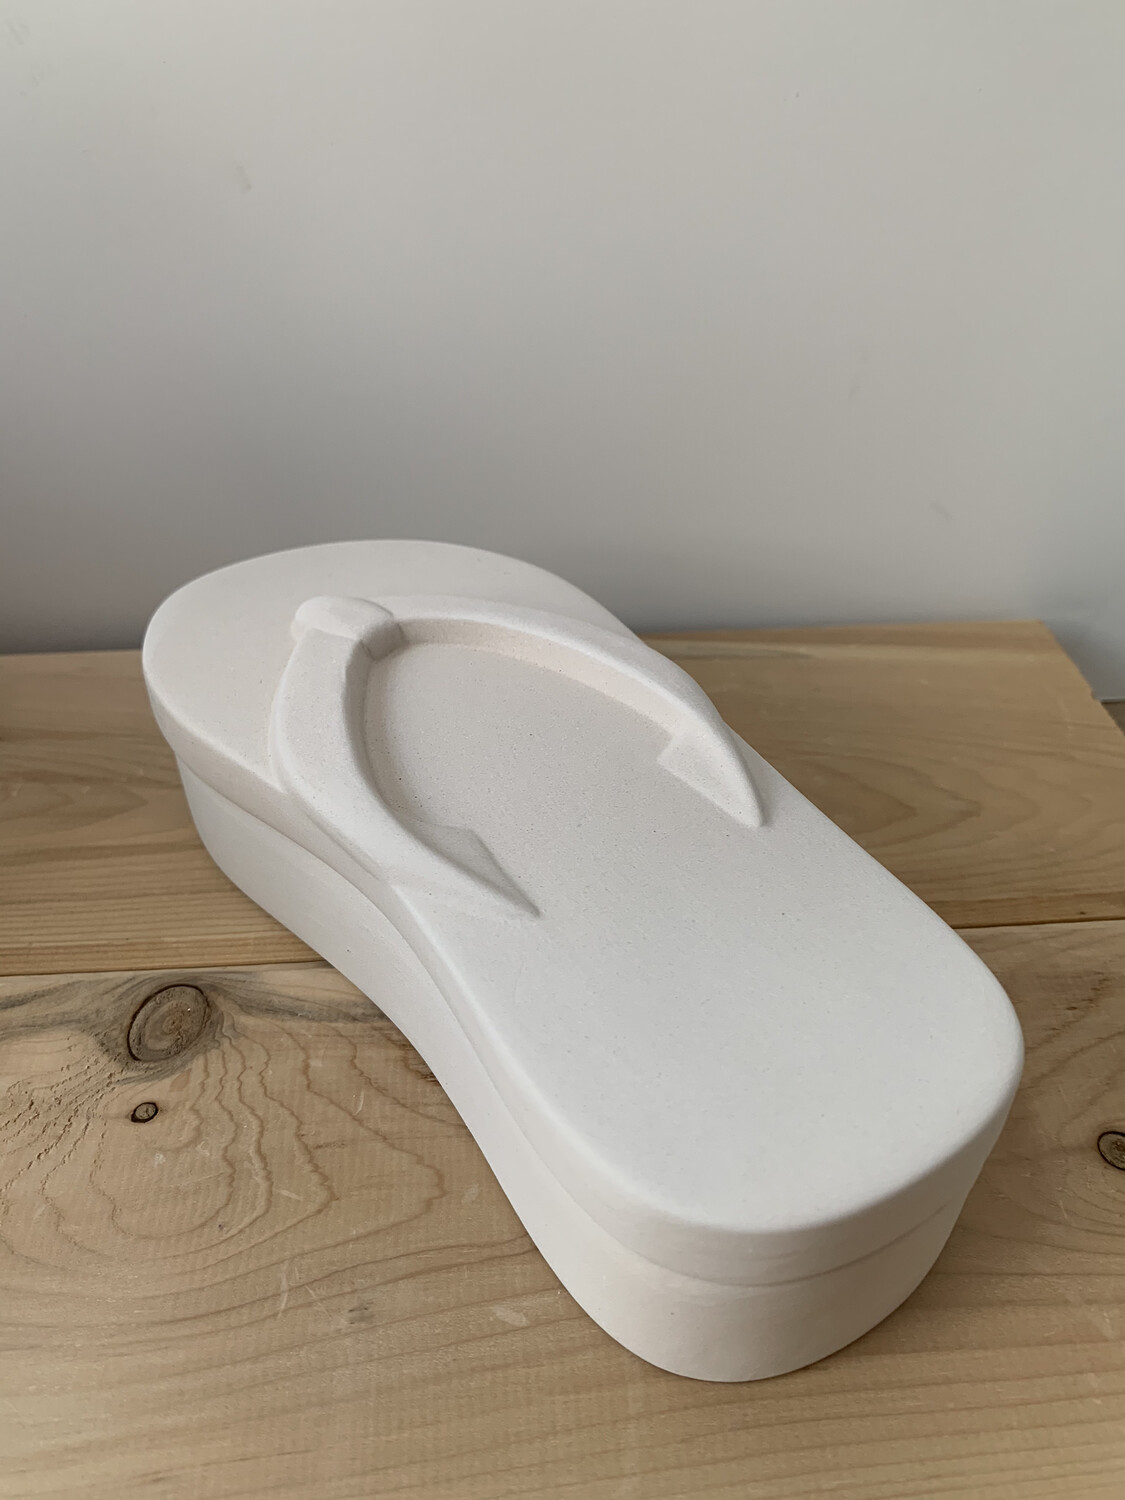 NO FIRE Paint Your Own Pottery Kit -
Ceramic Flip Flop Sandal Box Acrylic Painting Kit